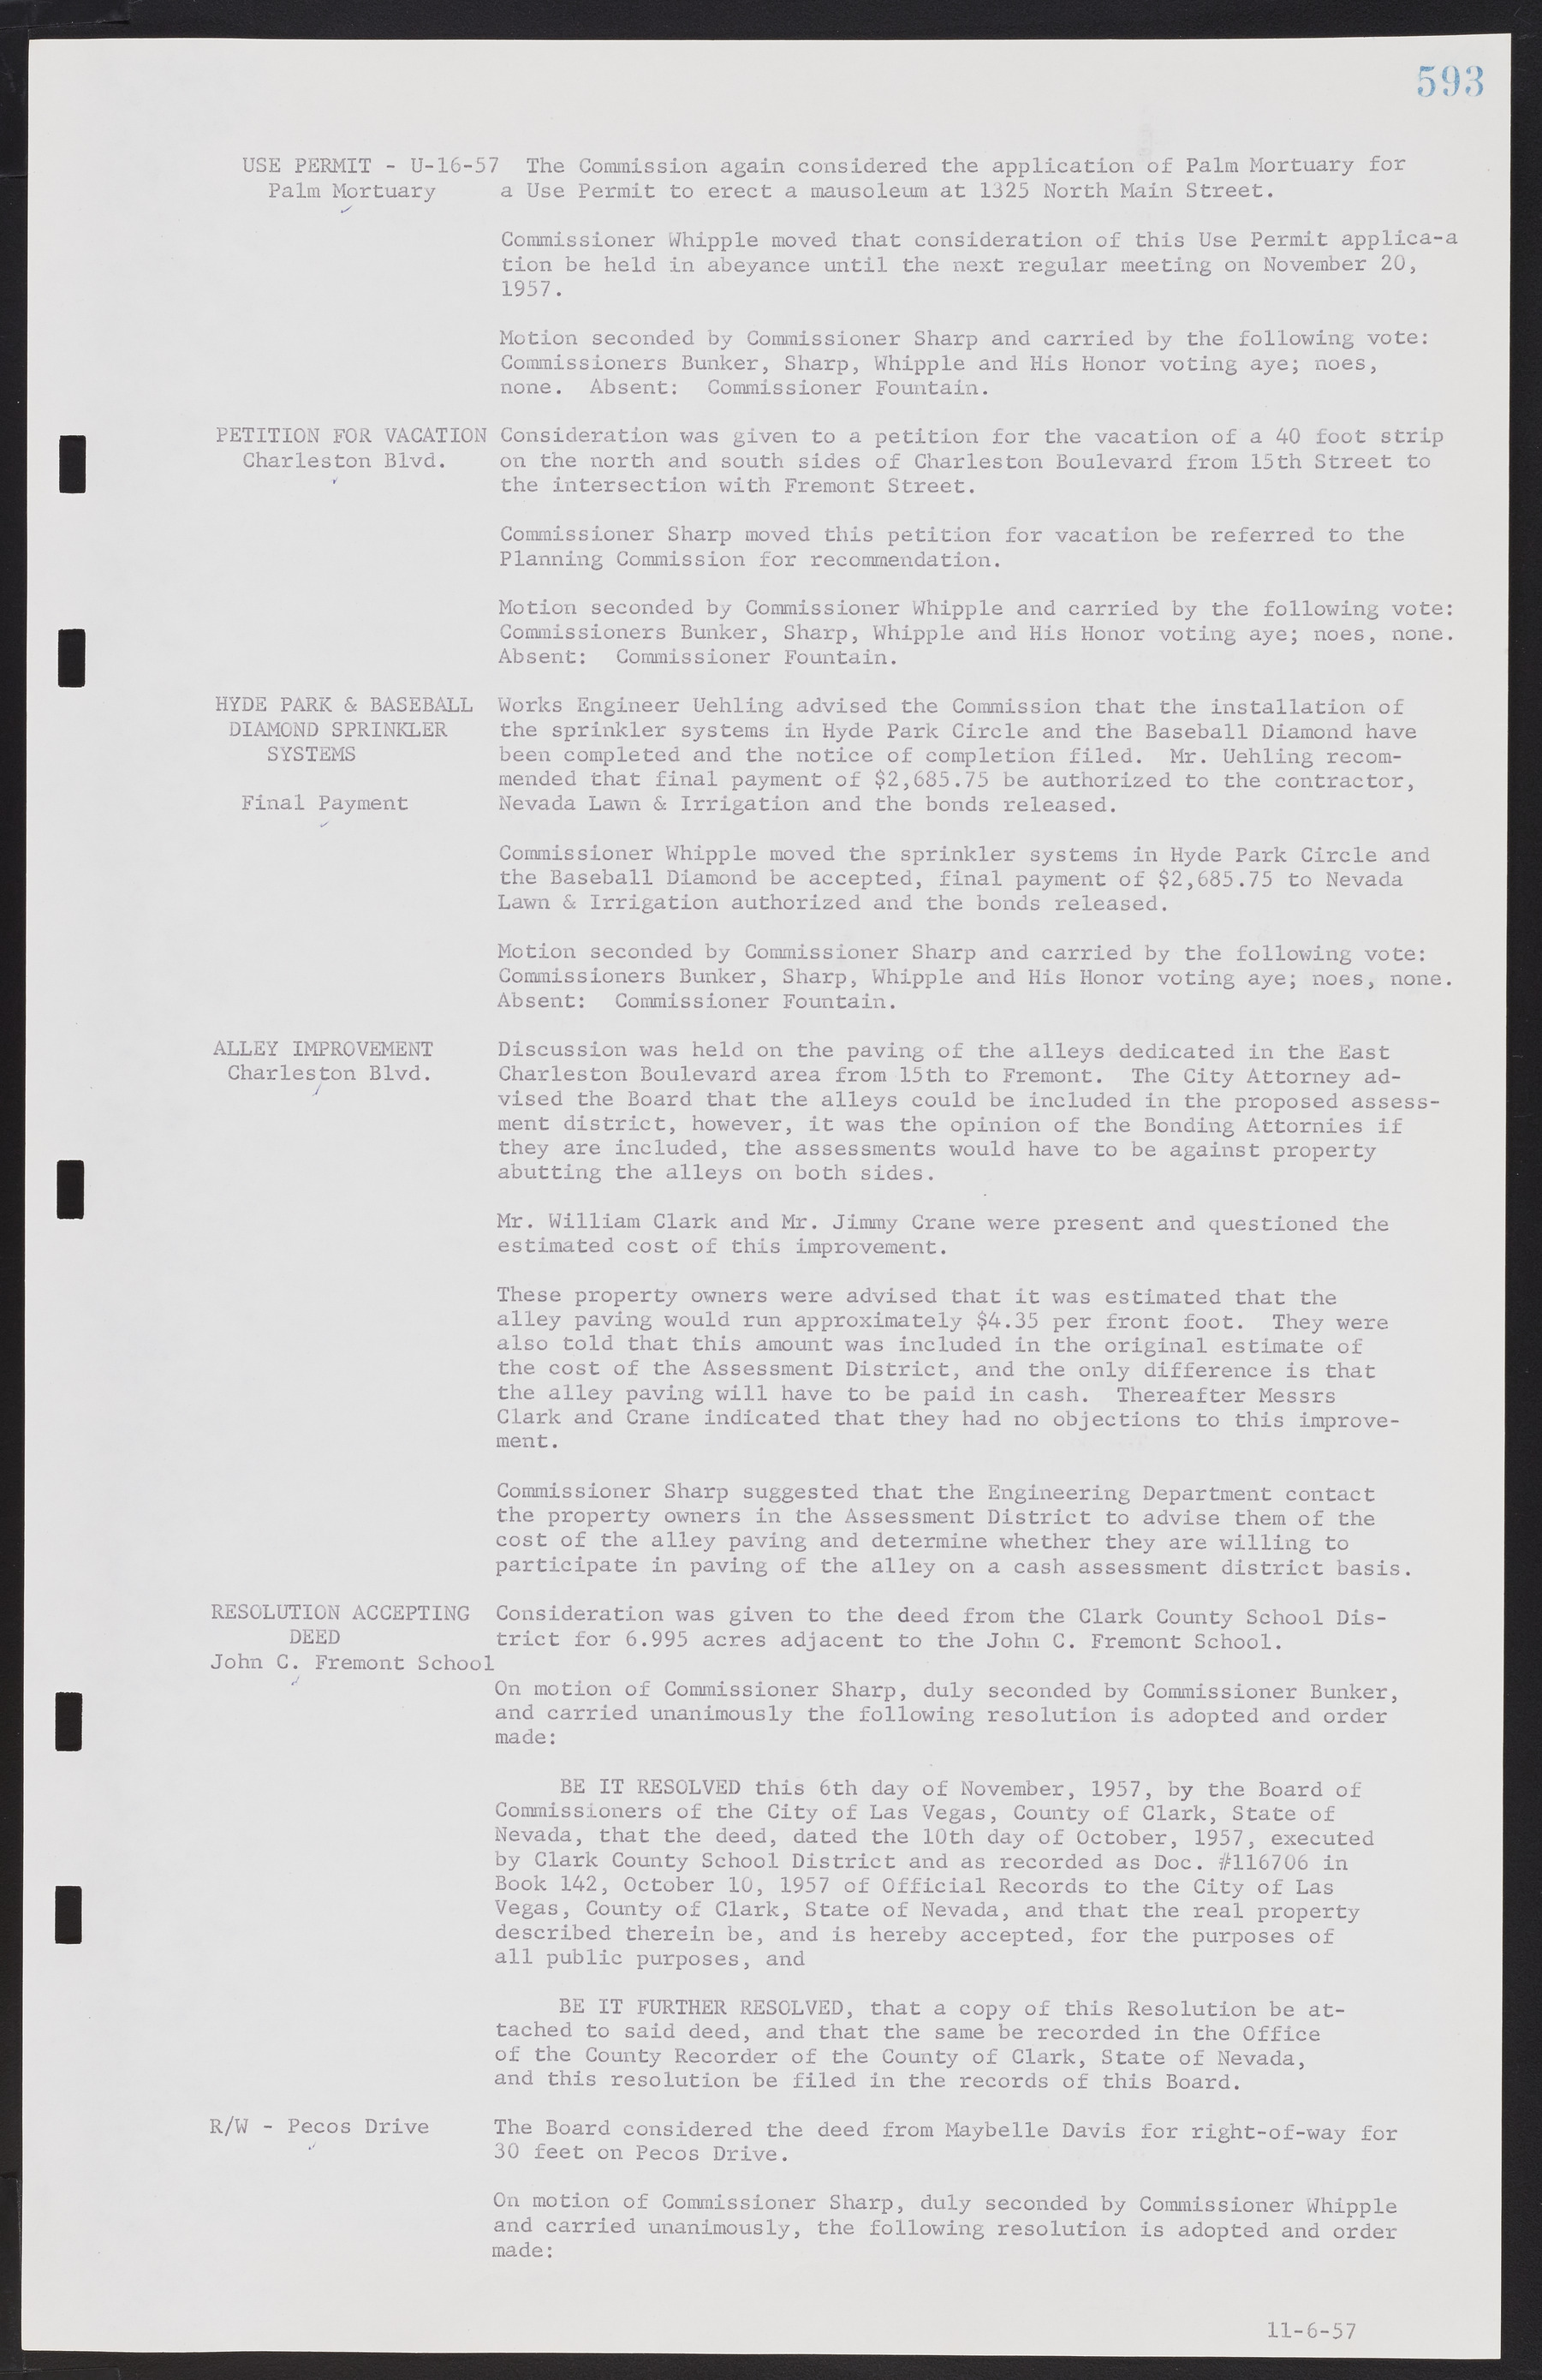 Las Vegas City Commission Minutes, September 21, 1955 to November 20, 1957, lvc000010-613